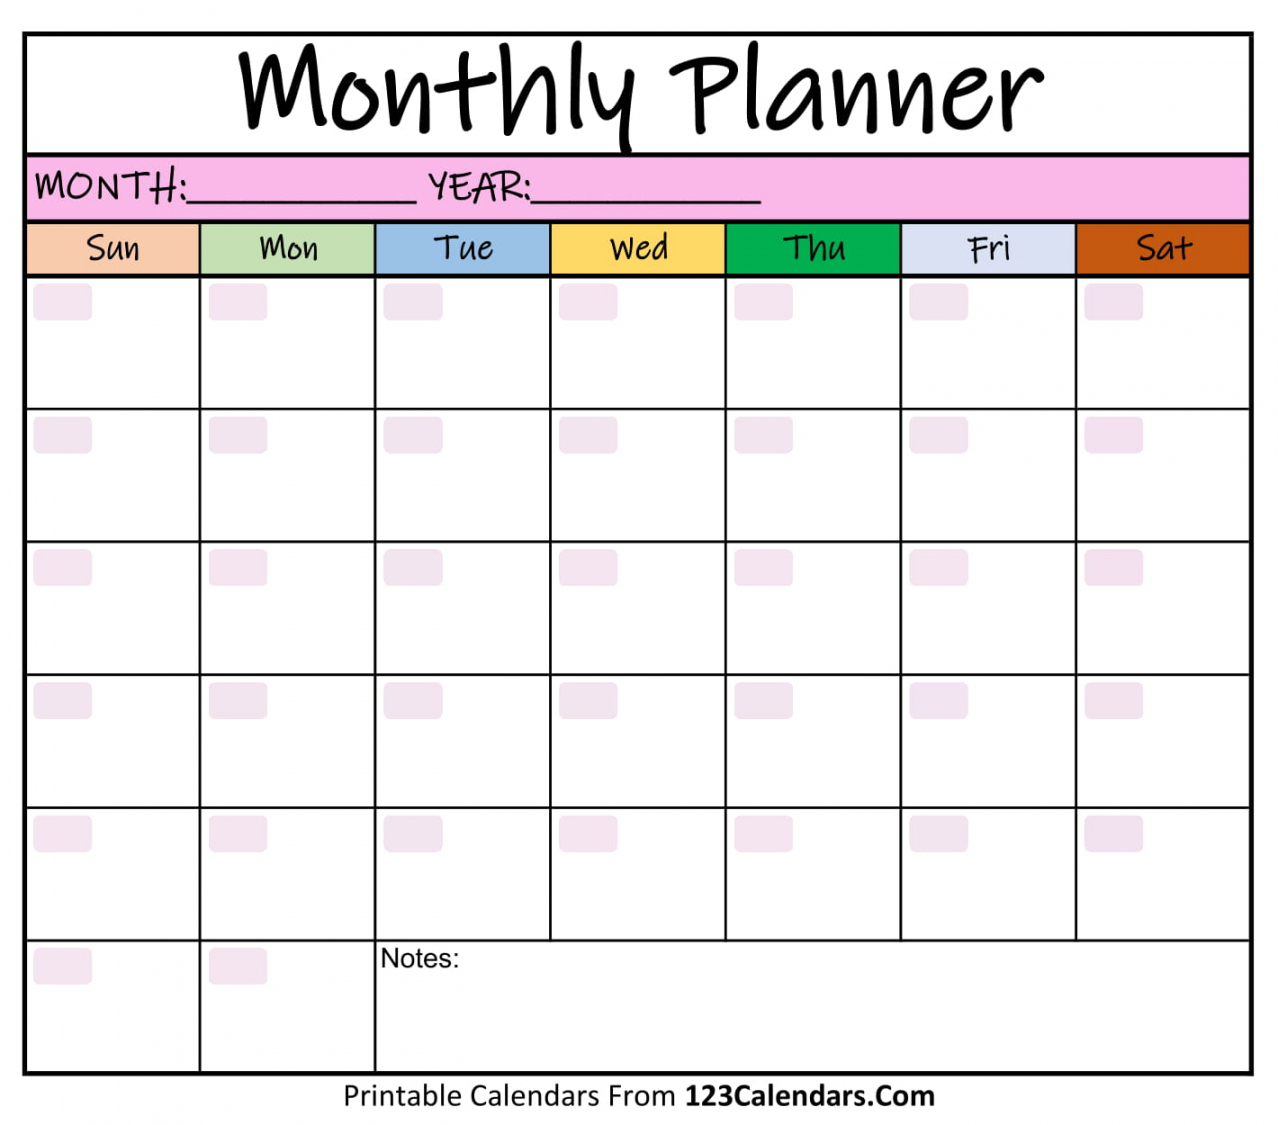 Free Printable Monthly Calendar - Printable - Printable Monthly Planner Templates  Calendars